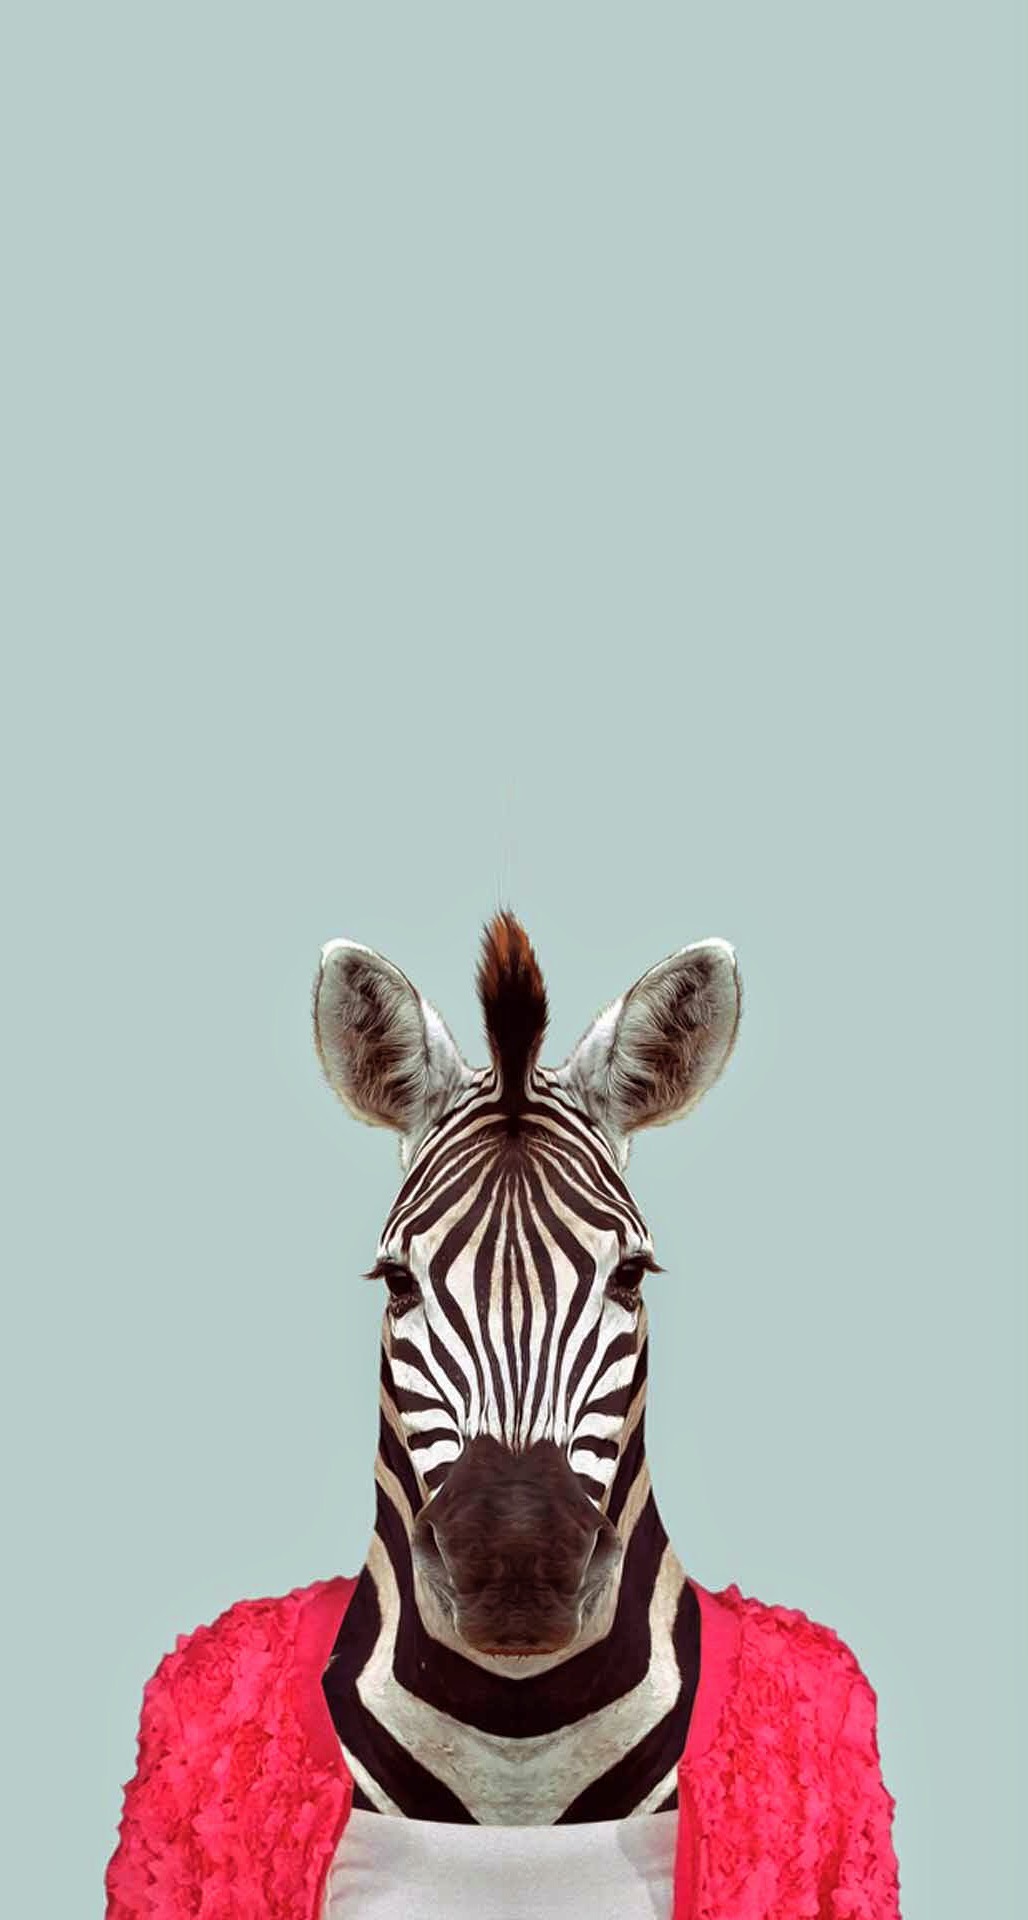 Zebra-Funny-Animal-Portrait-iPhone-6-Plus-HD-Wallpaper.